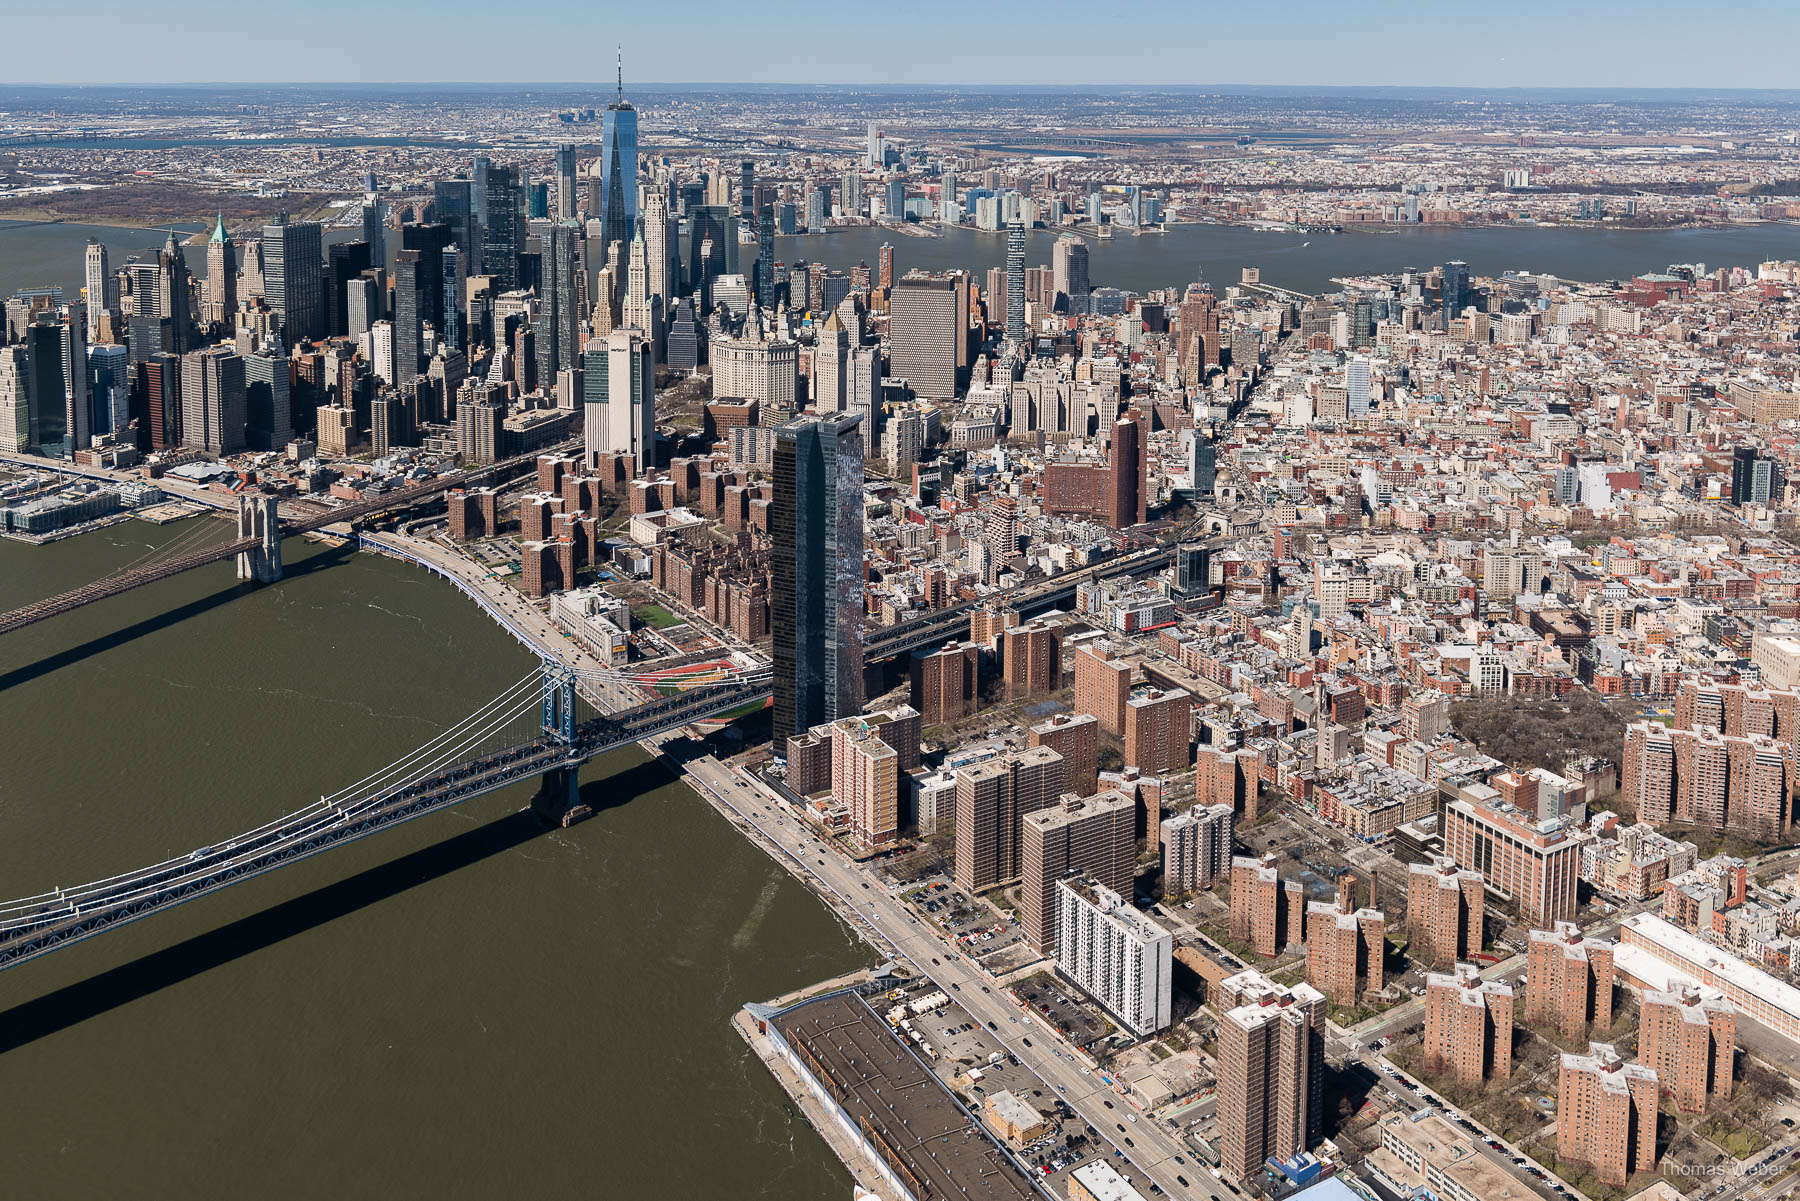 Rundflug mit dem Helikopter über Manhattan in New York City, USA, Thomas Weber, Fotograf in Oldenburg